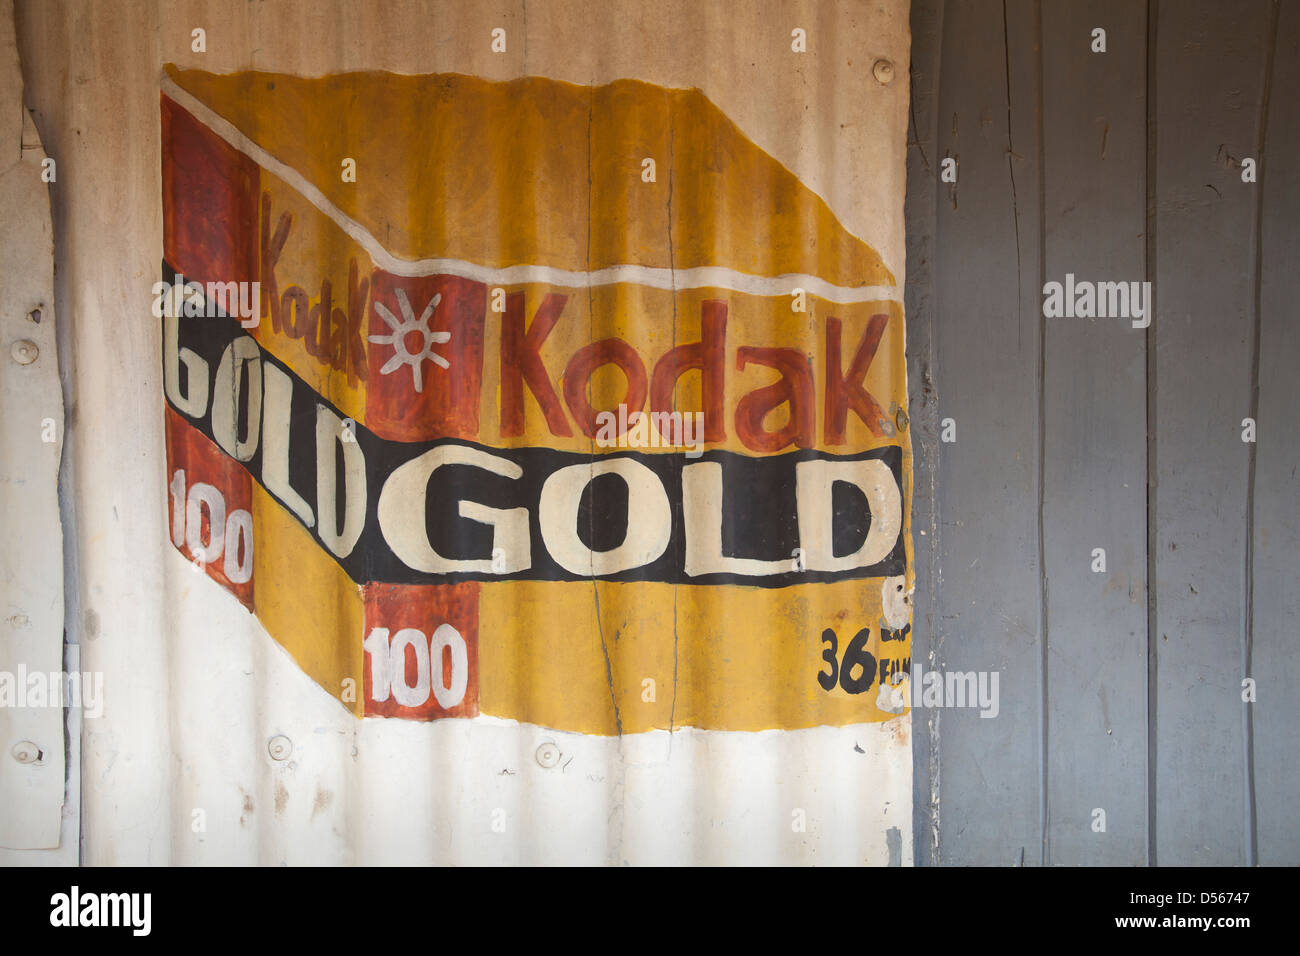 Painting on corrugated tin advertising Kodak gold film, Kenya. Stock Photo